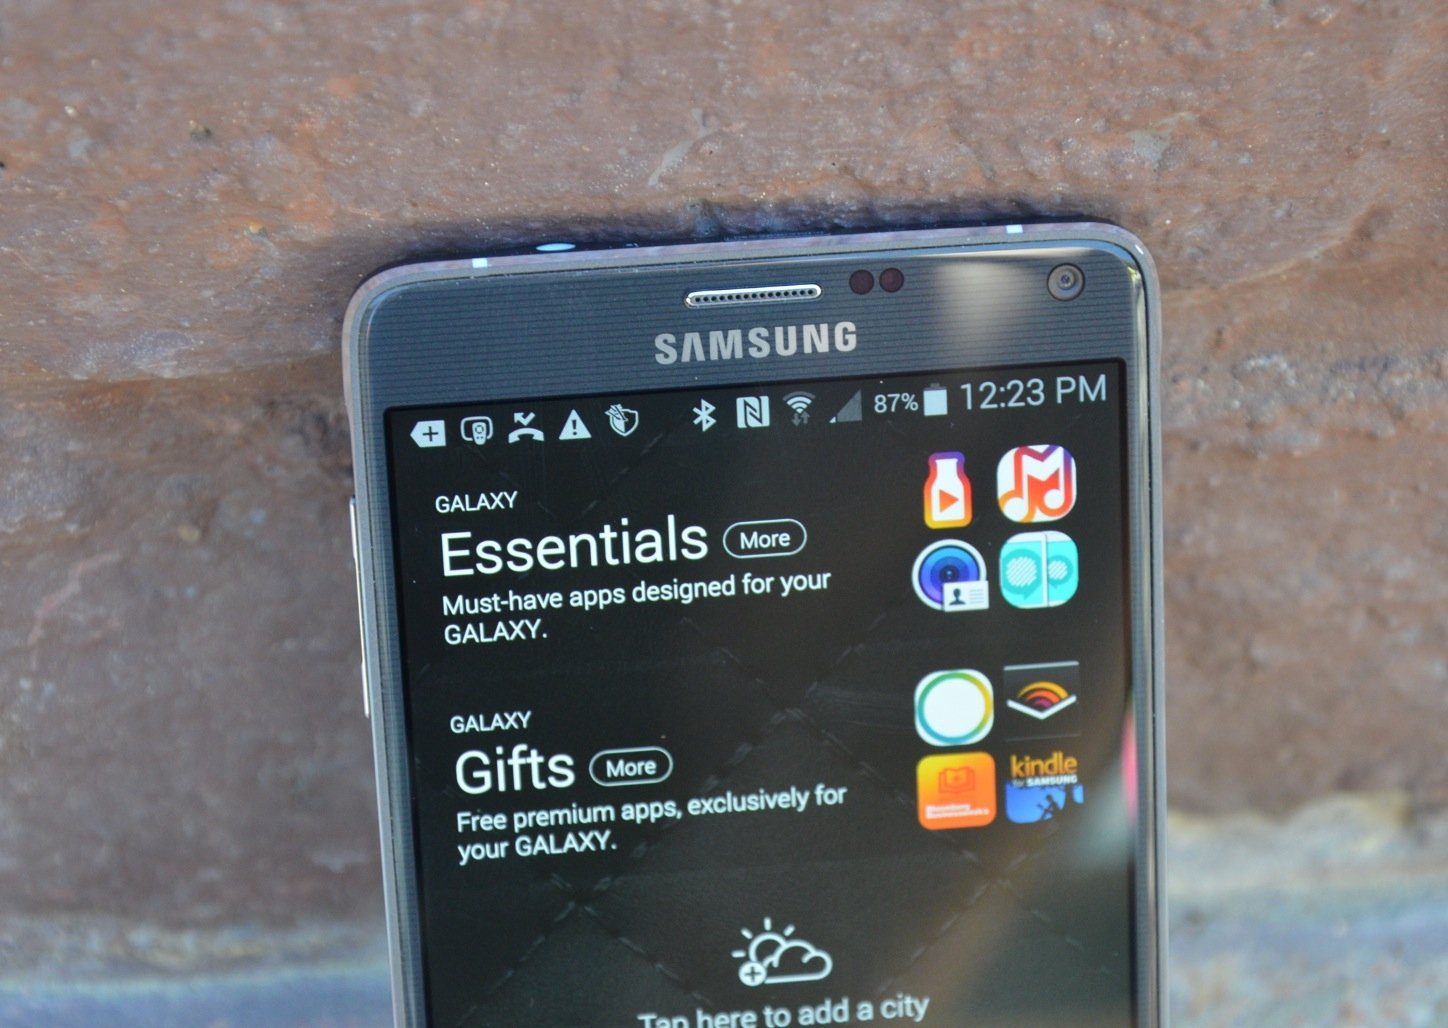 Смс уведомлений самсунг. Samsung сообщения. Самсунг информация. SMS Samsung Galaxy s4. Samsung Galaxy Notification Bar.